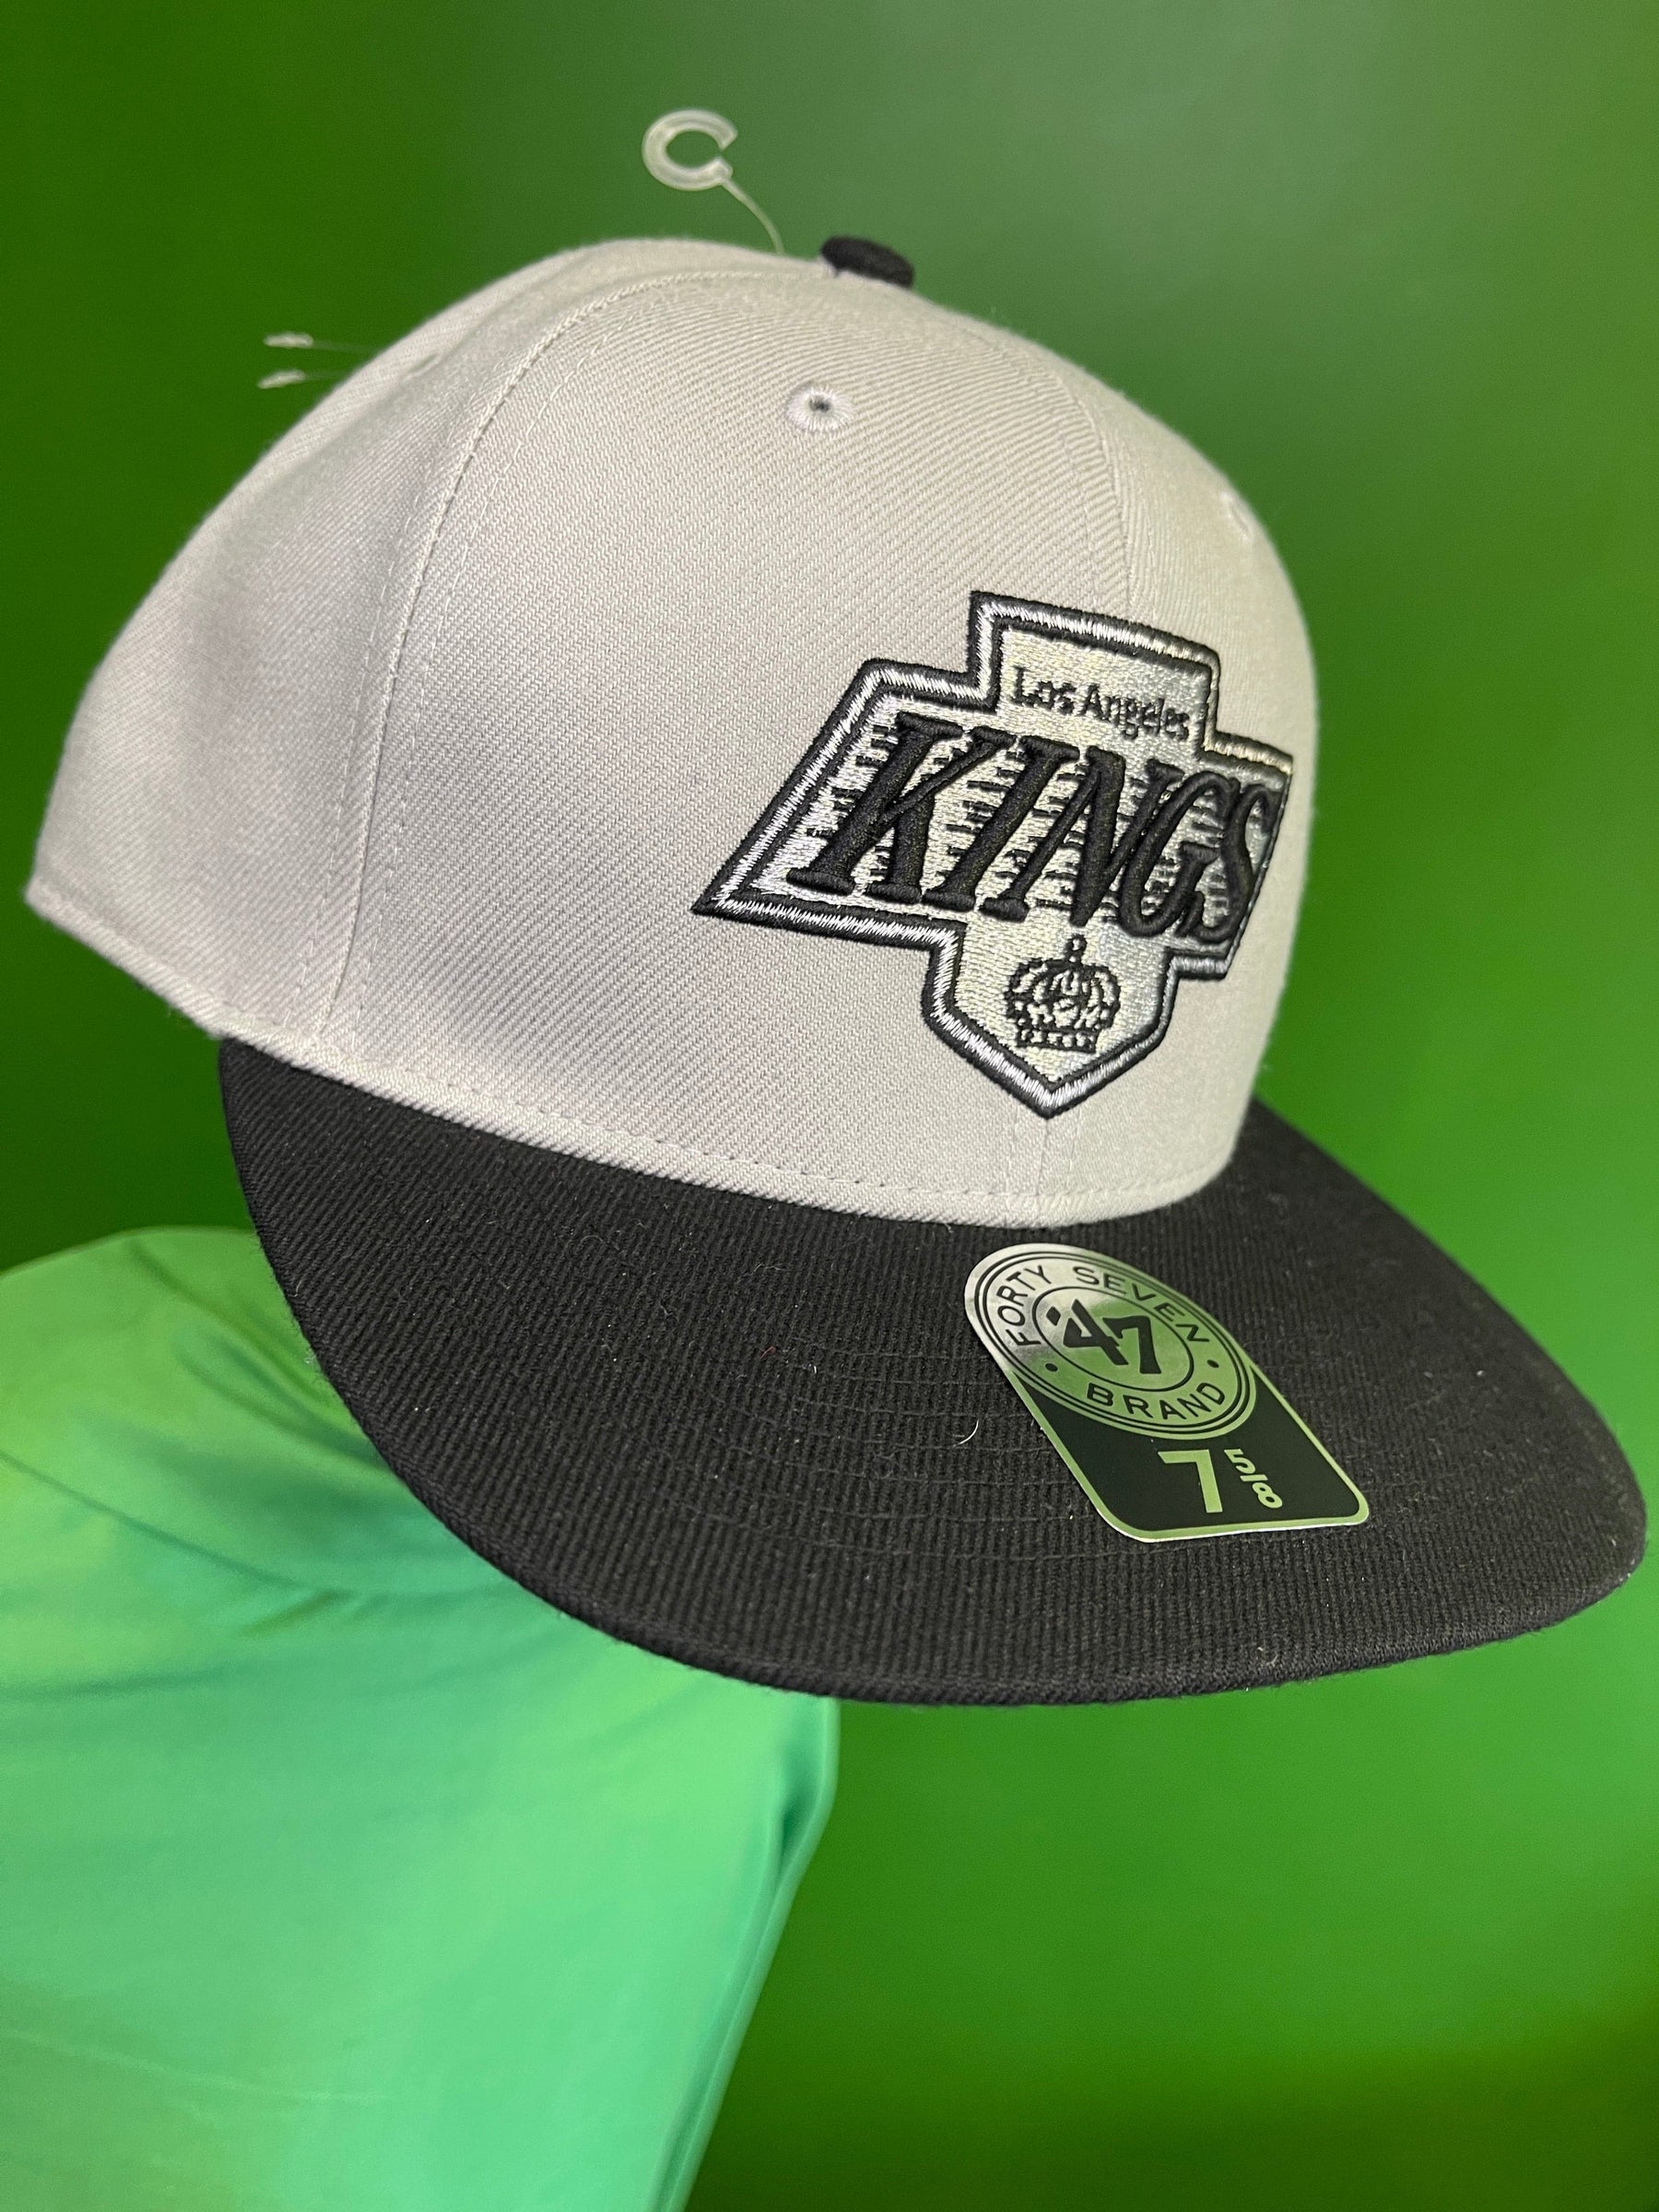 Las Vegas Raiders 47 Brand Two-Tone Contender Stretch Fit Hat Cap